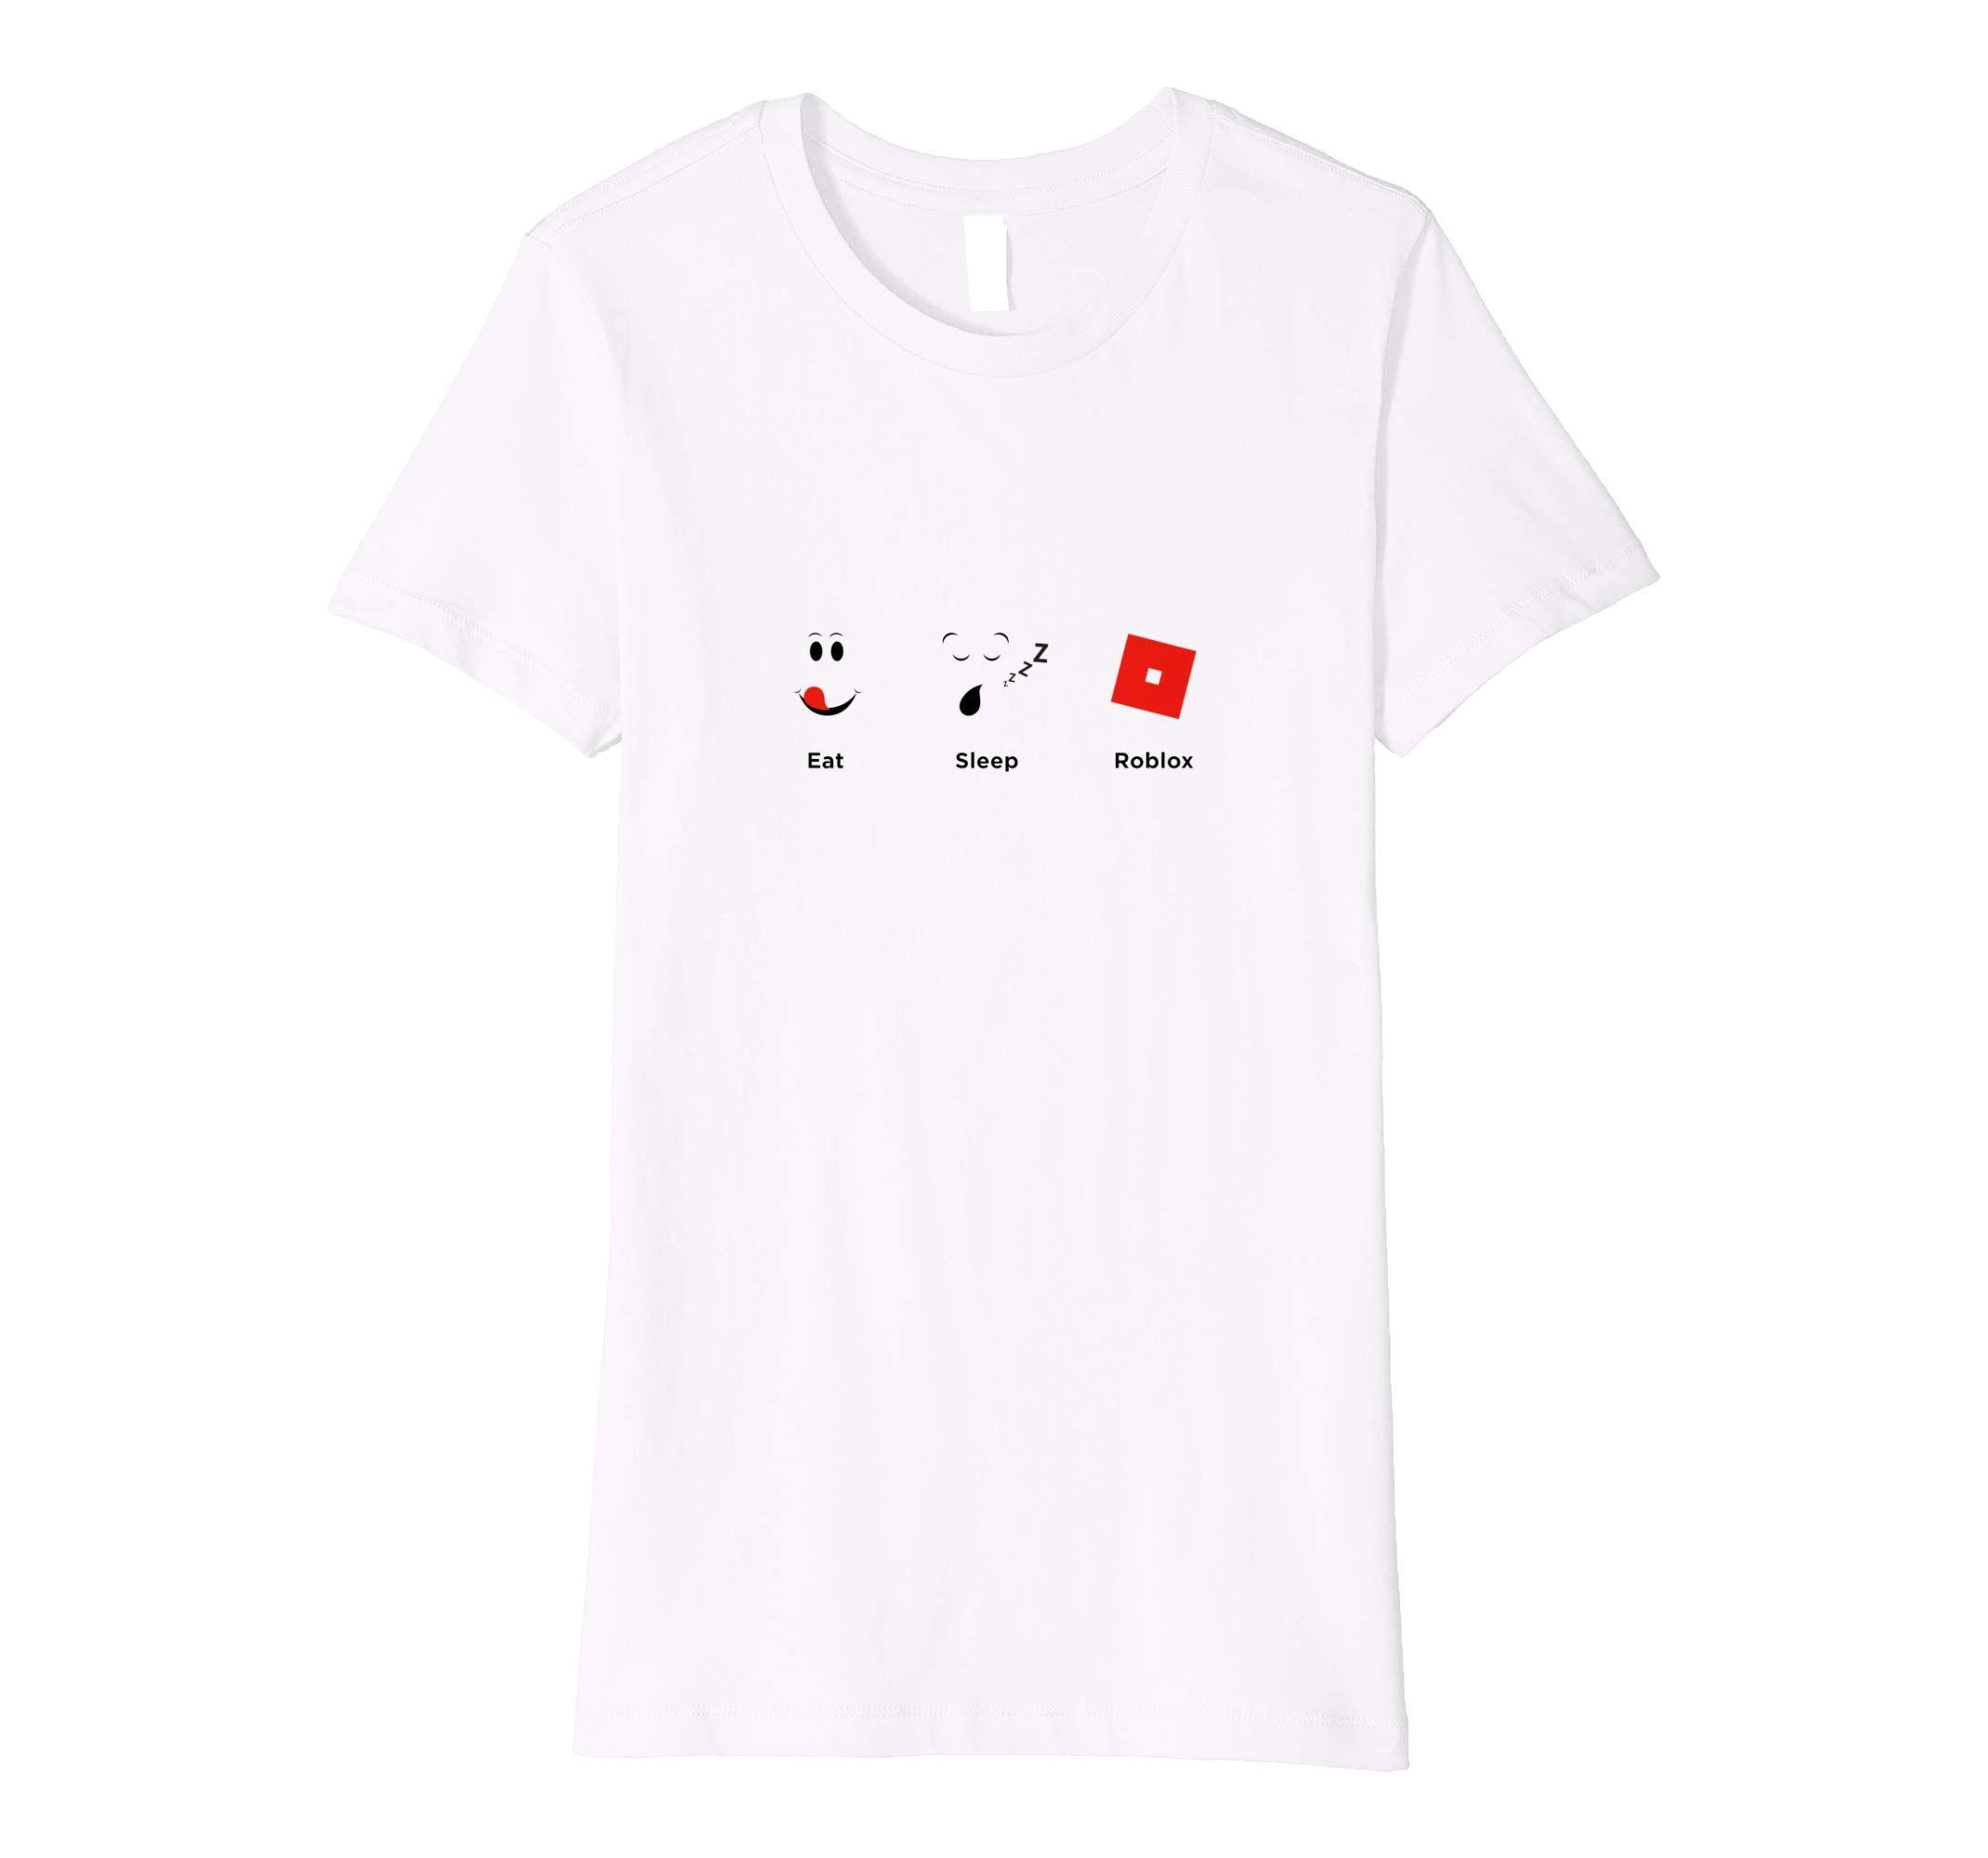 Roblox T-Shirt Logo - Amazon.com: Eat. Sleep. Roblox. T-shirt: Clothing